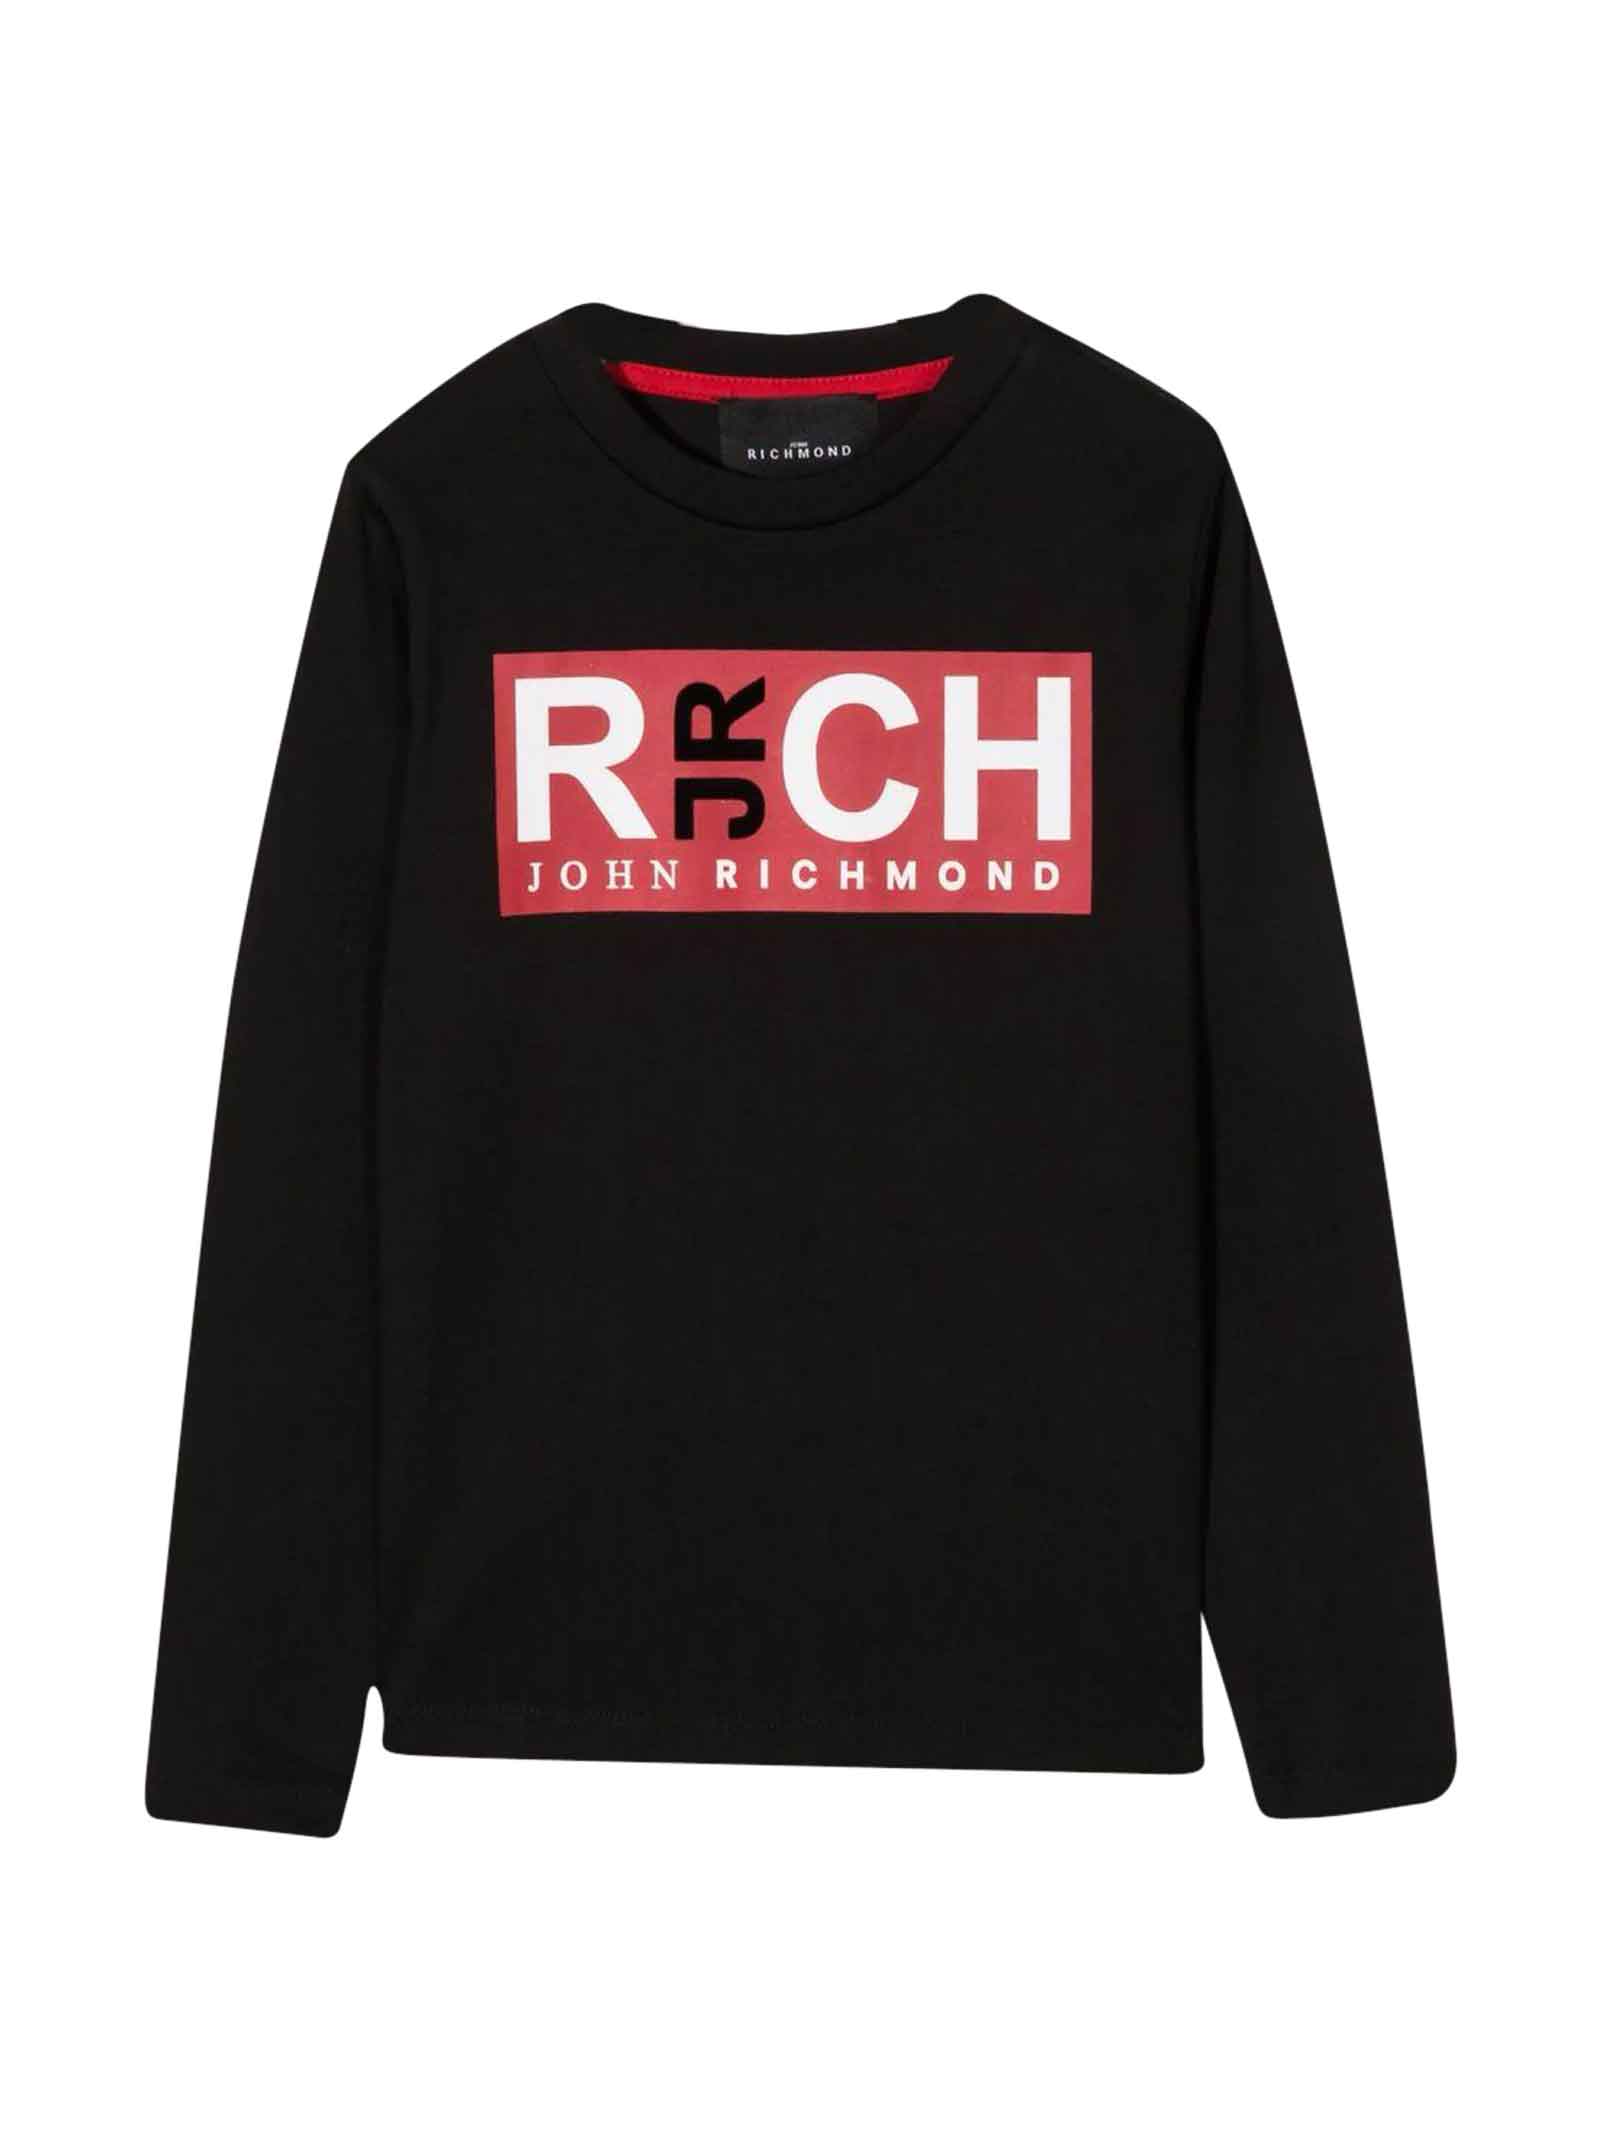 John Richmond Black Teen Shirt With Long Sleeves And Red Print